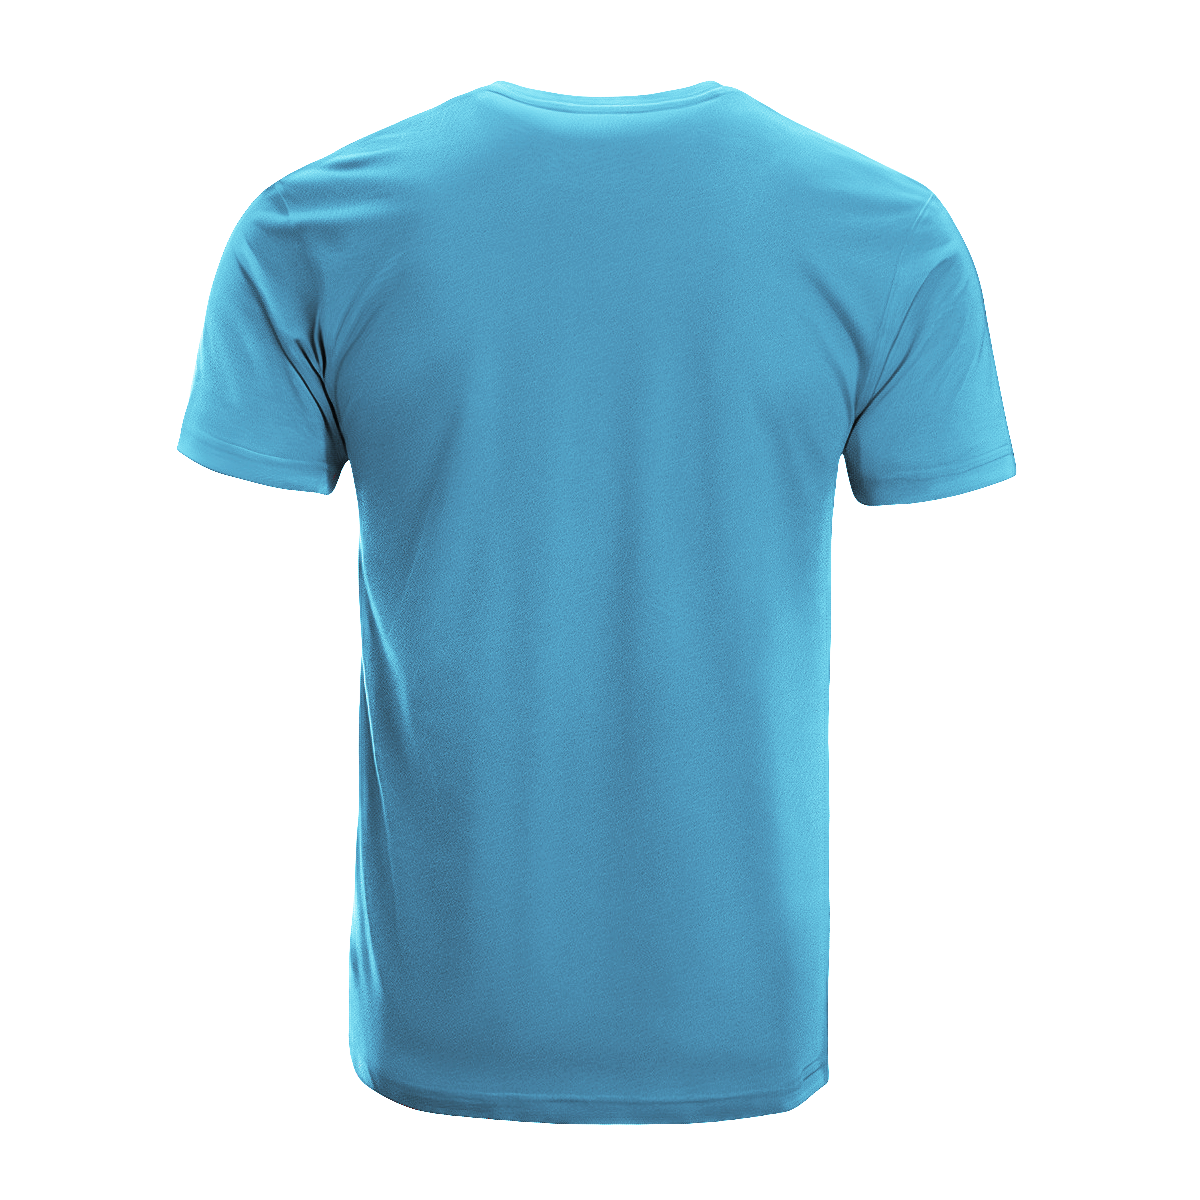 Keith Tartan Crest T-shirt - I'm not yelling style